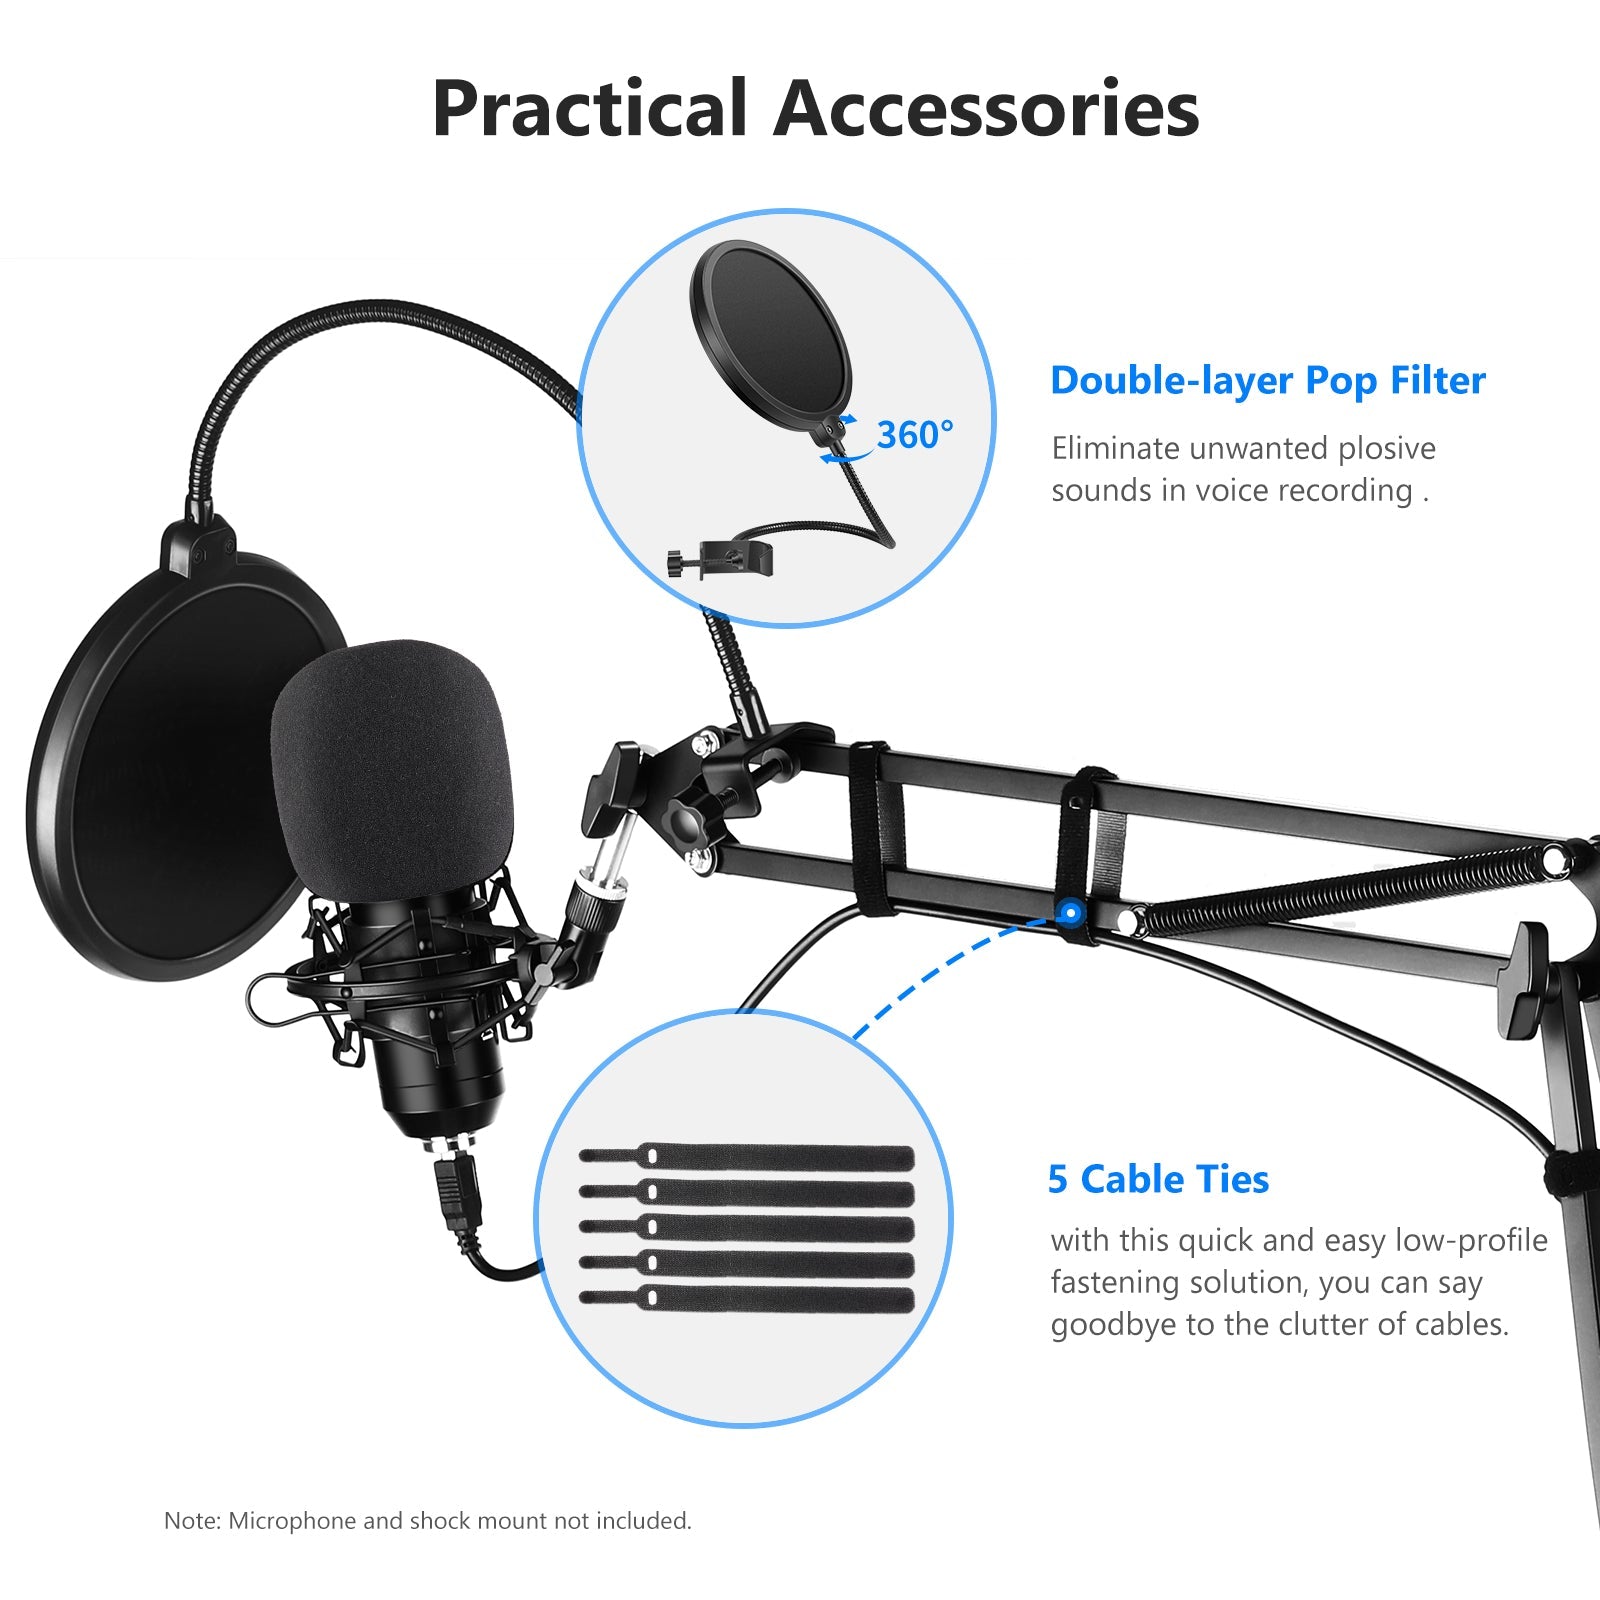 Neewer Microphone Standard, Bras de microphone